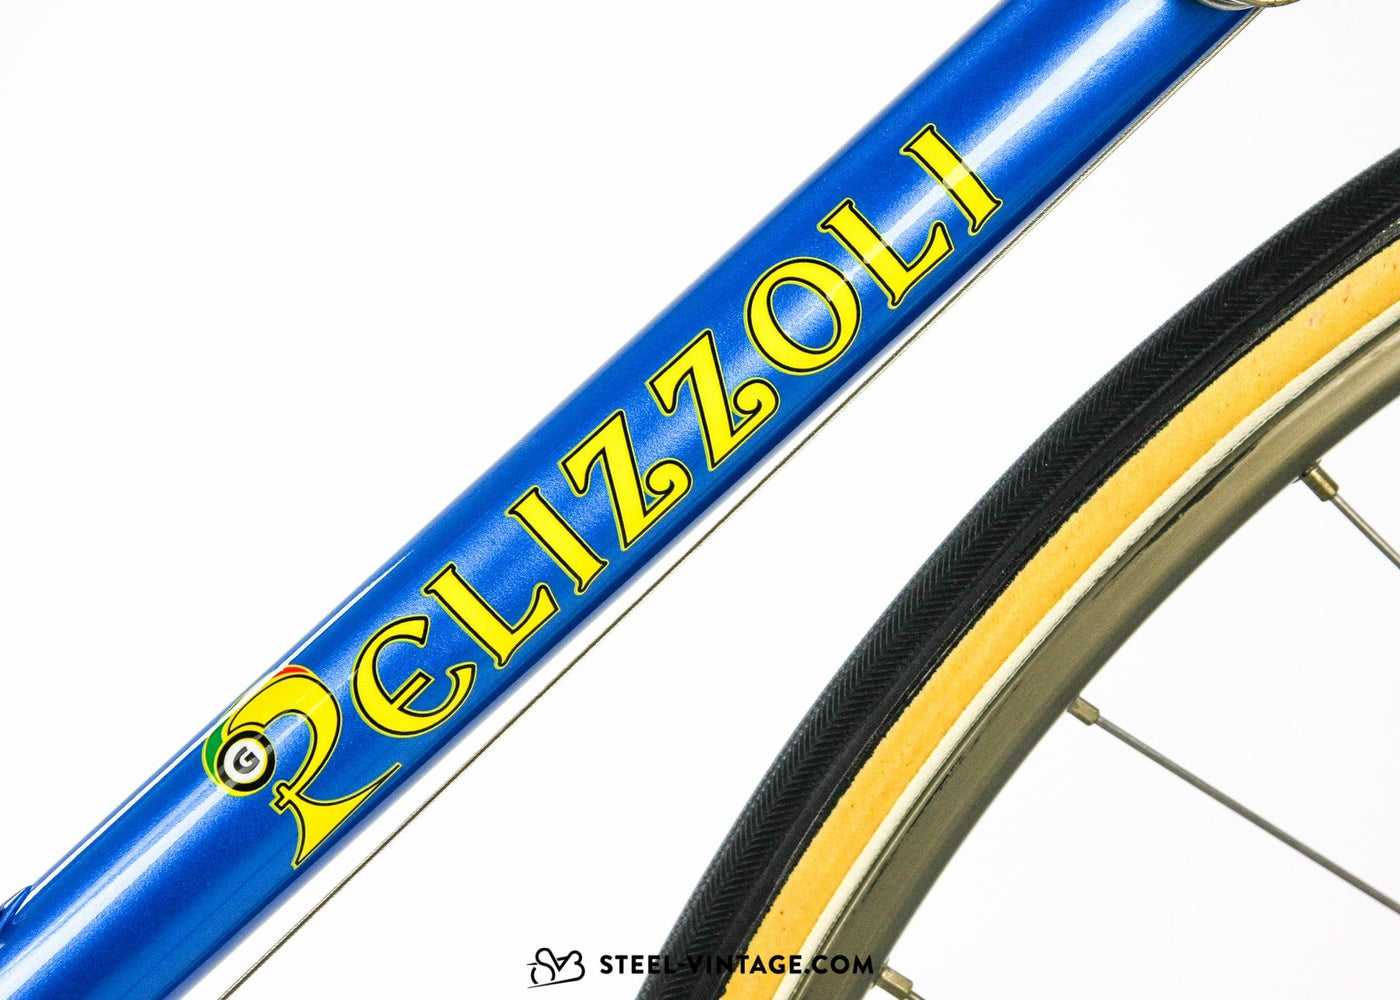 Pelizzoli Super Record Classic Racing Bicycles - Steel Vintage Bikes